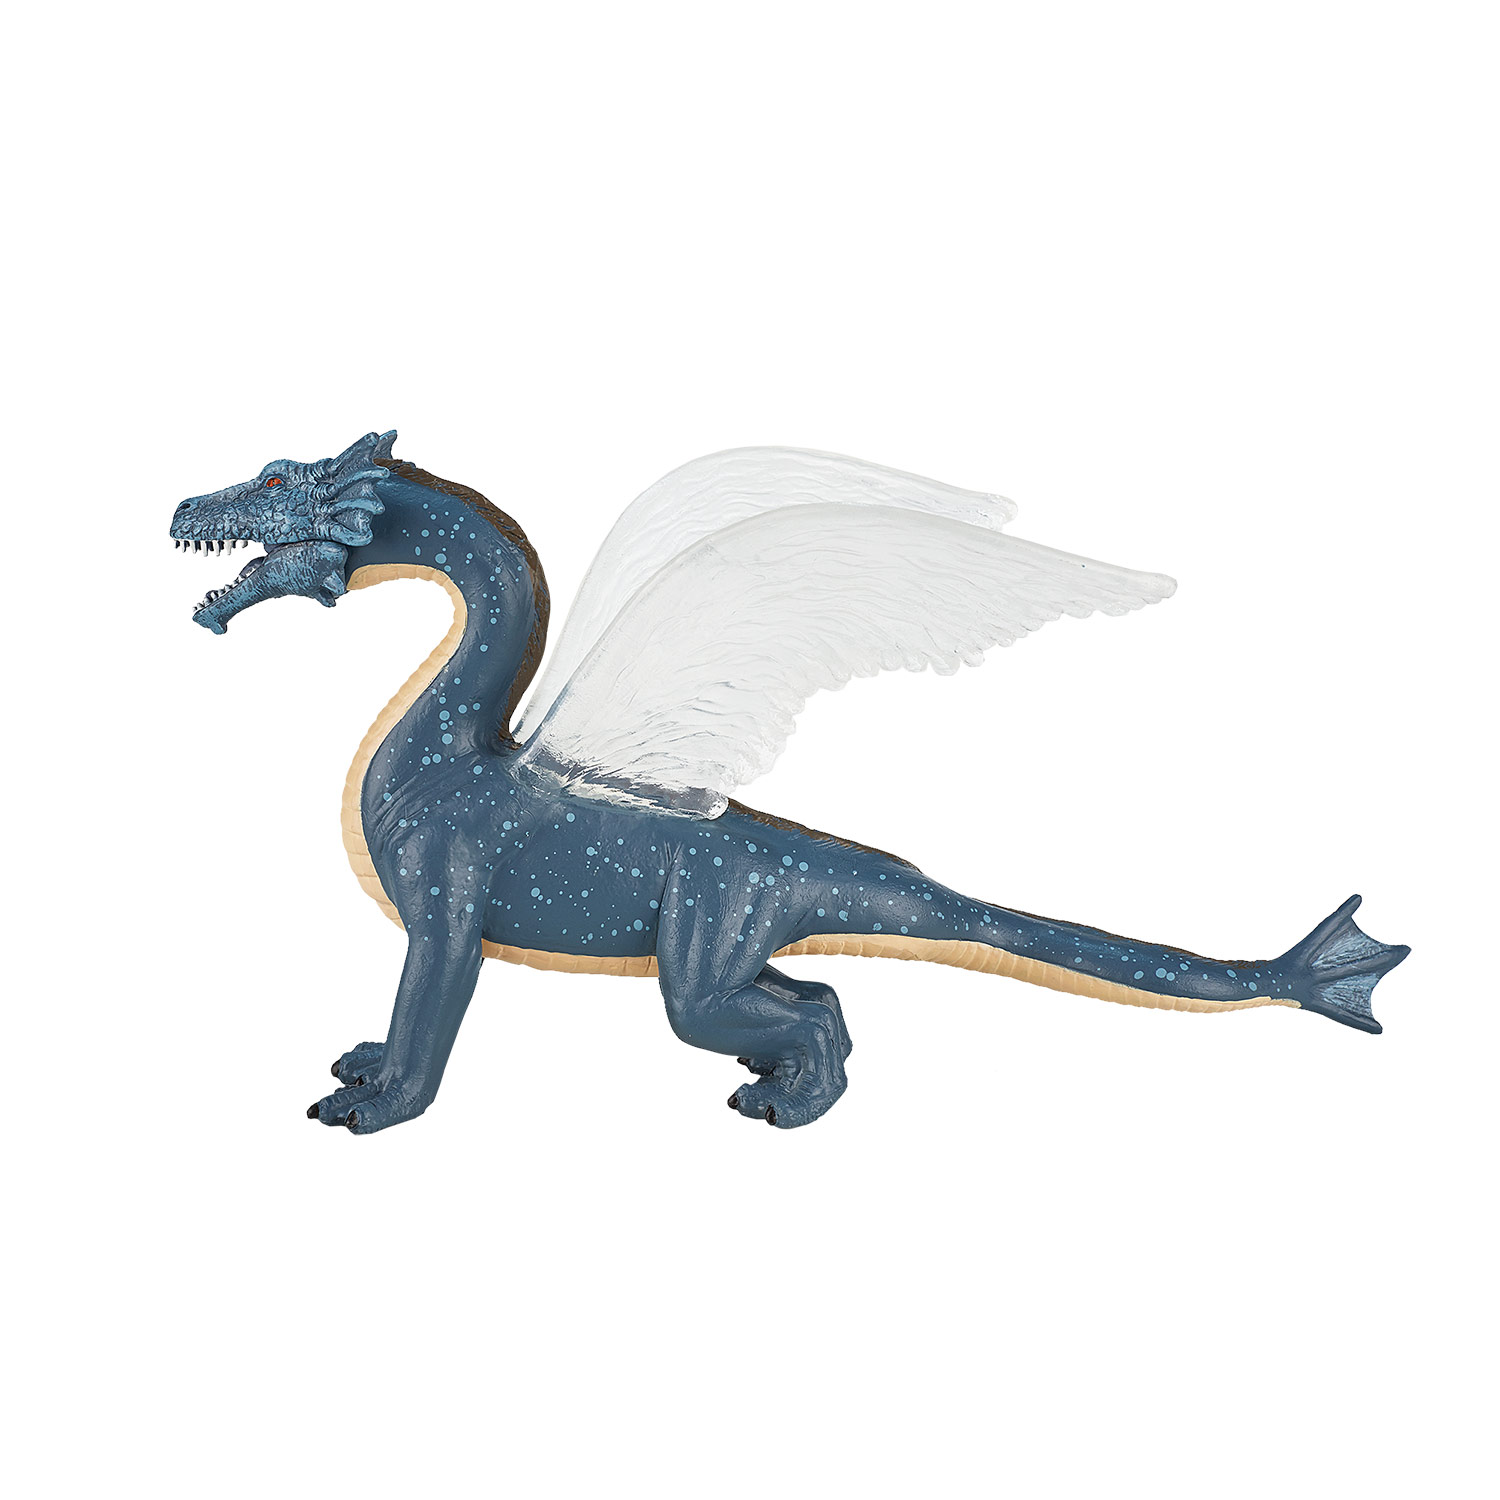 Mojo Fantasy Sea Dragon mit beweglichem Kiefer - 387252